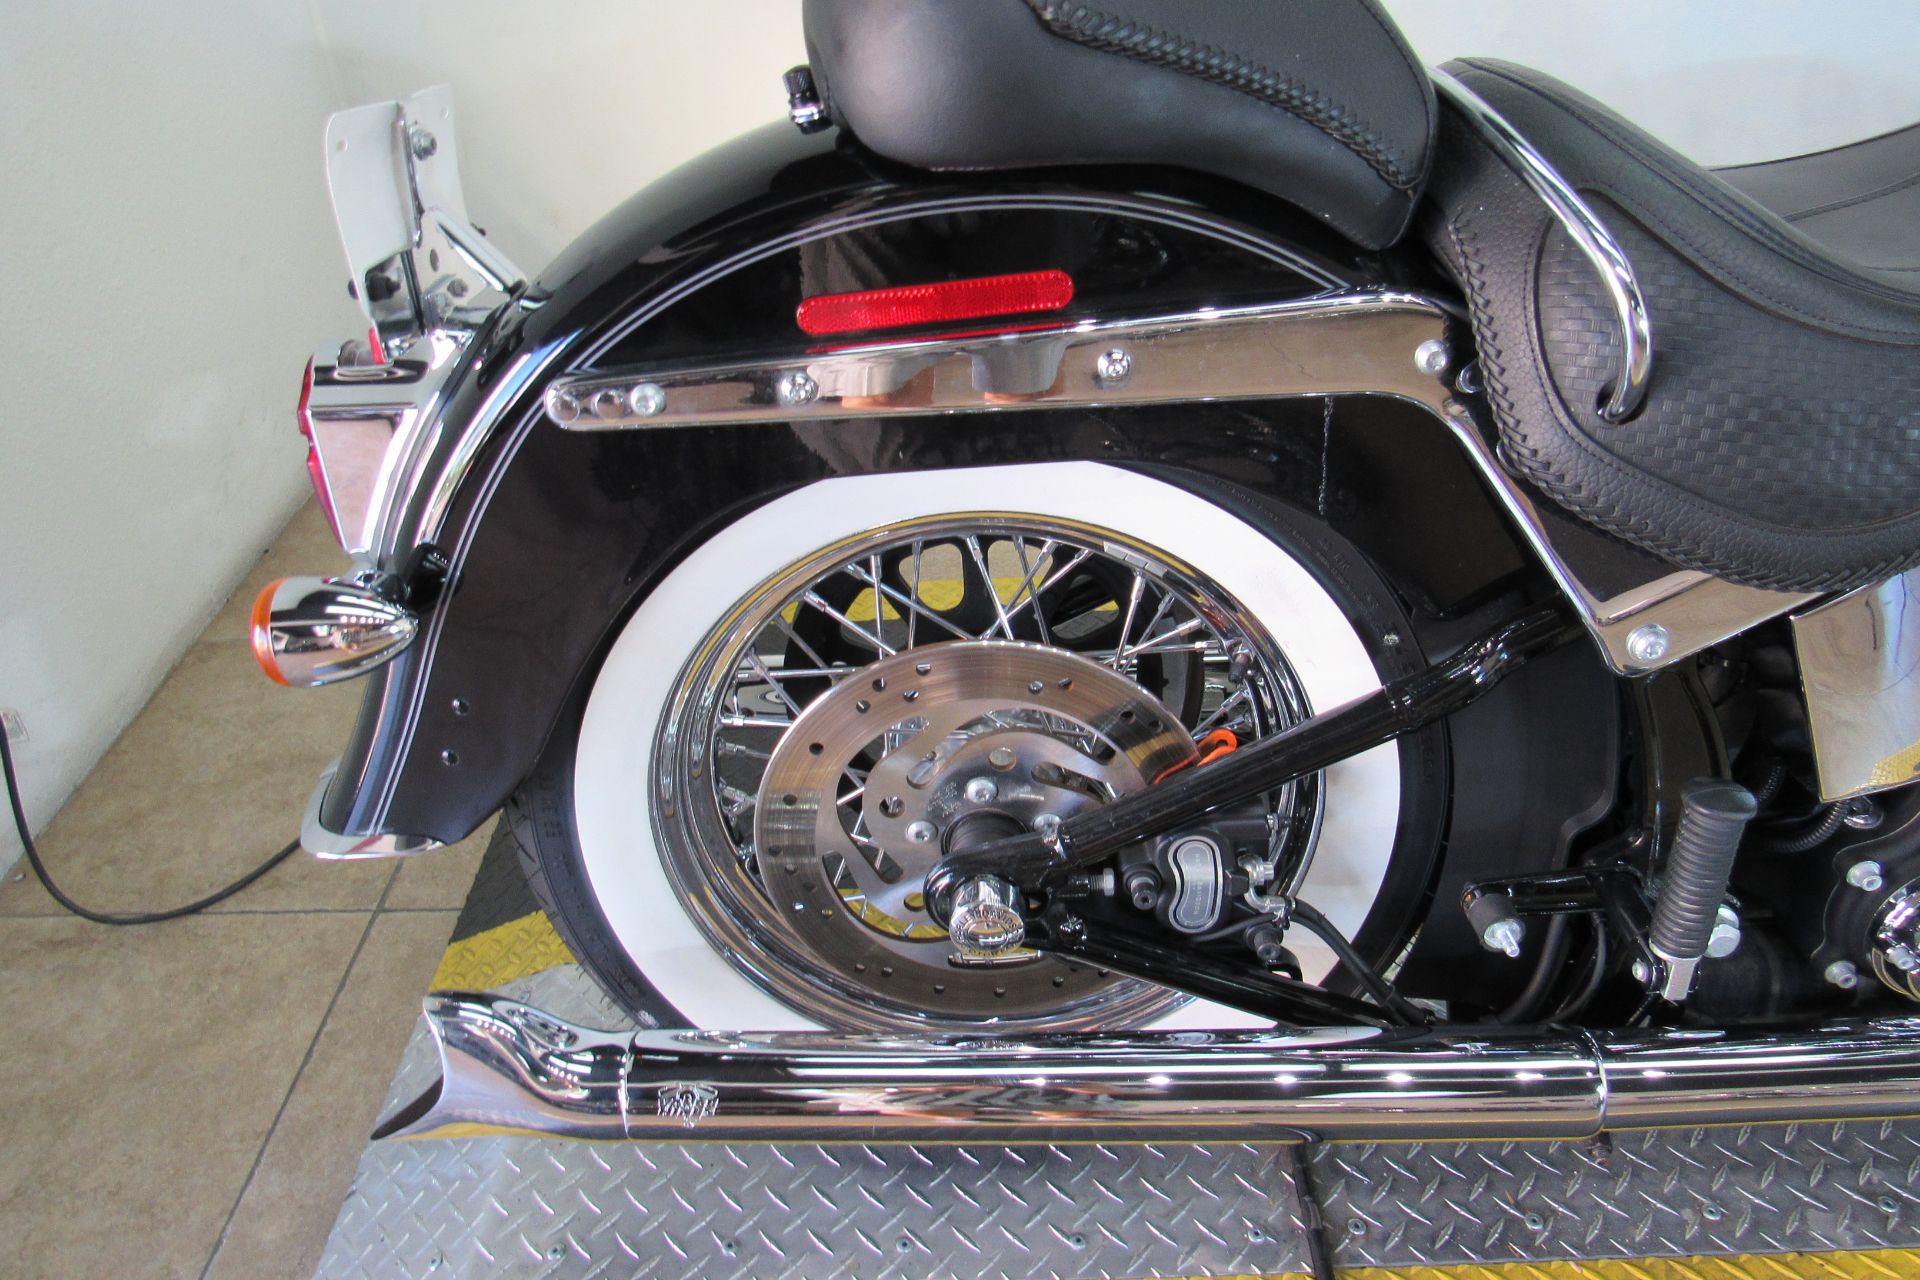 2014 Harley-Davidson Softail® Deluxe in Temecula, California - Photo 19